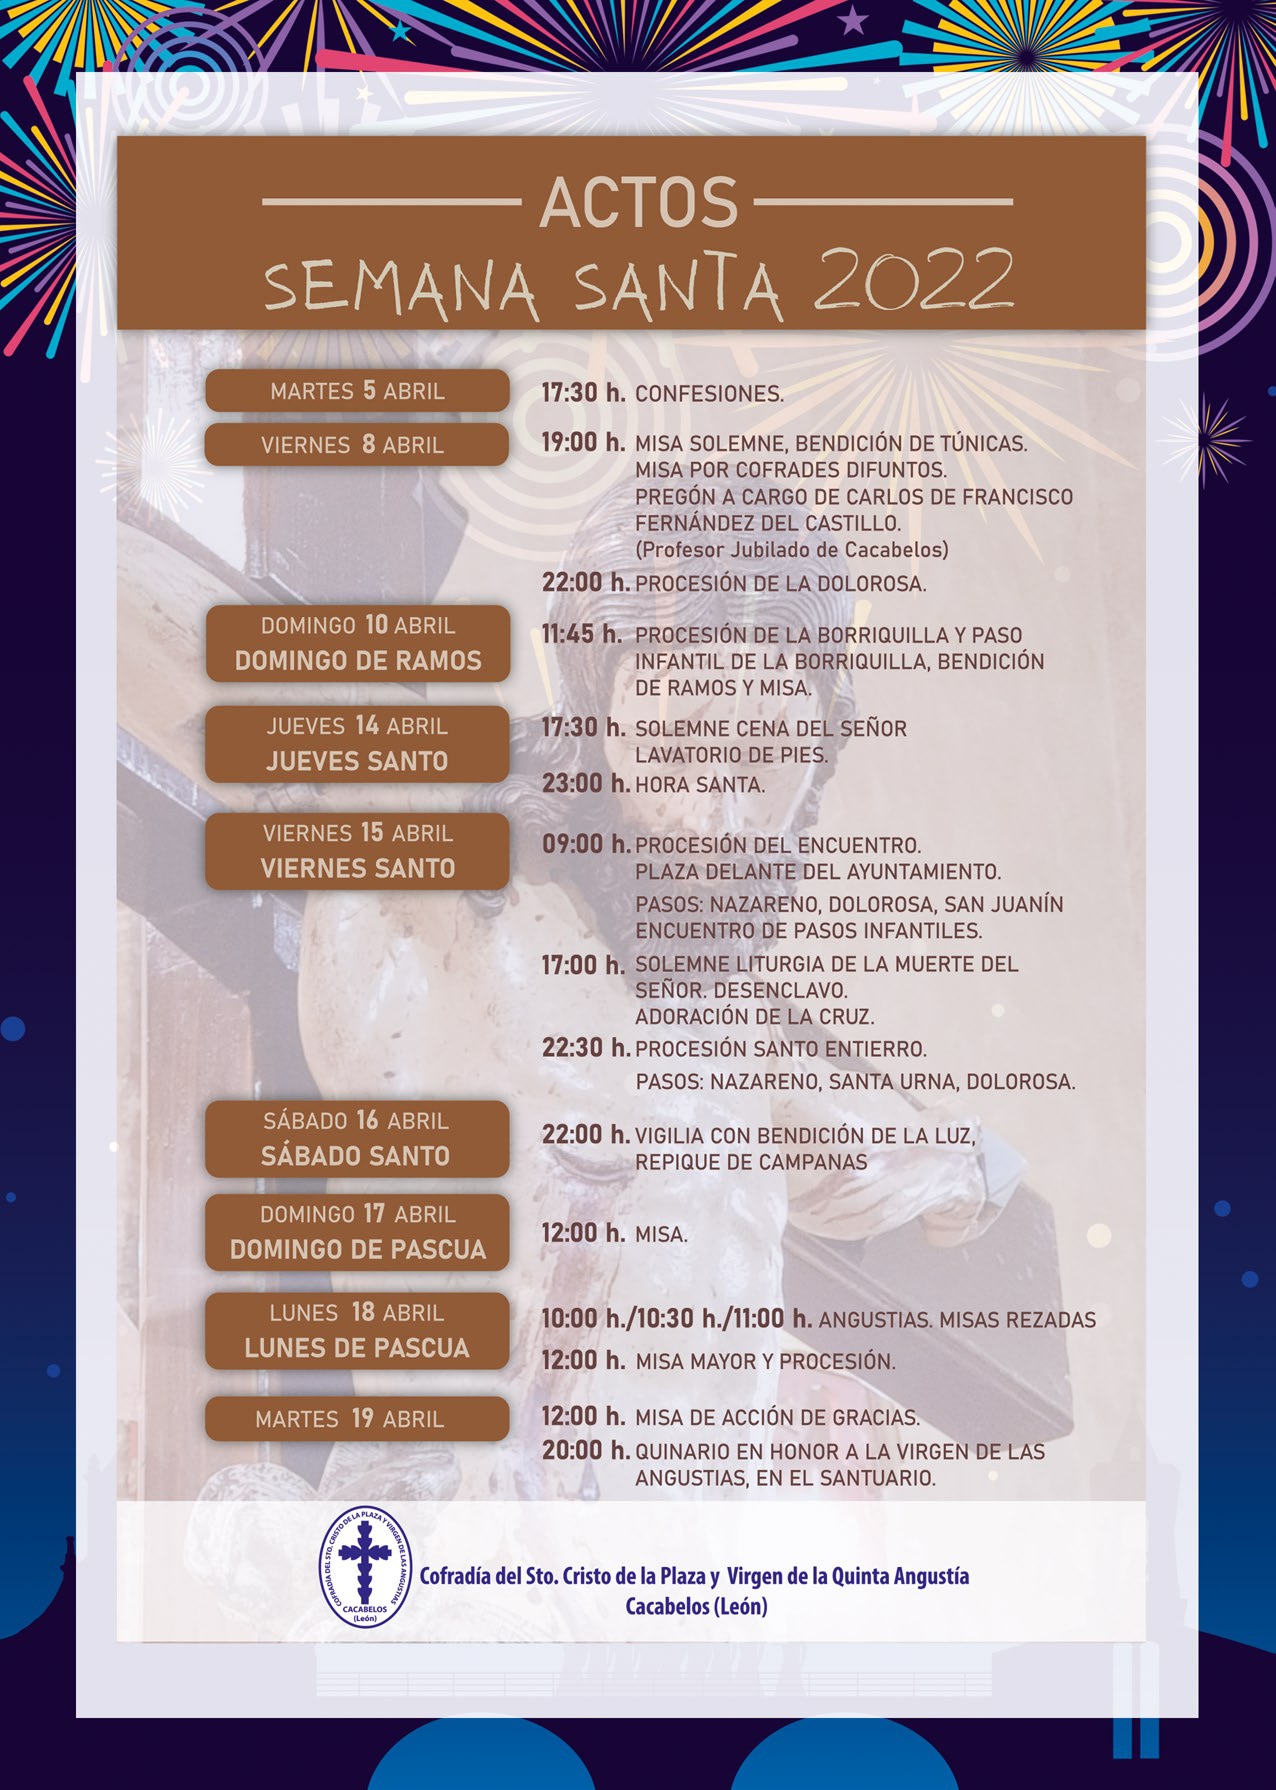 Fiestas de Pascua 2022 en Cacabelos. Programa de actividades 18